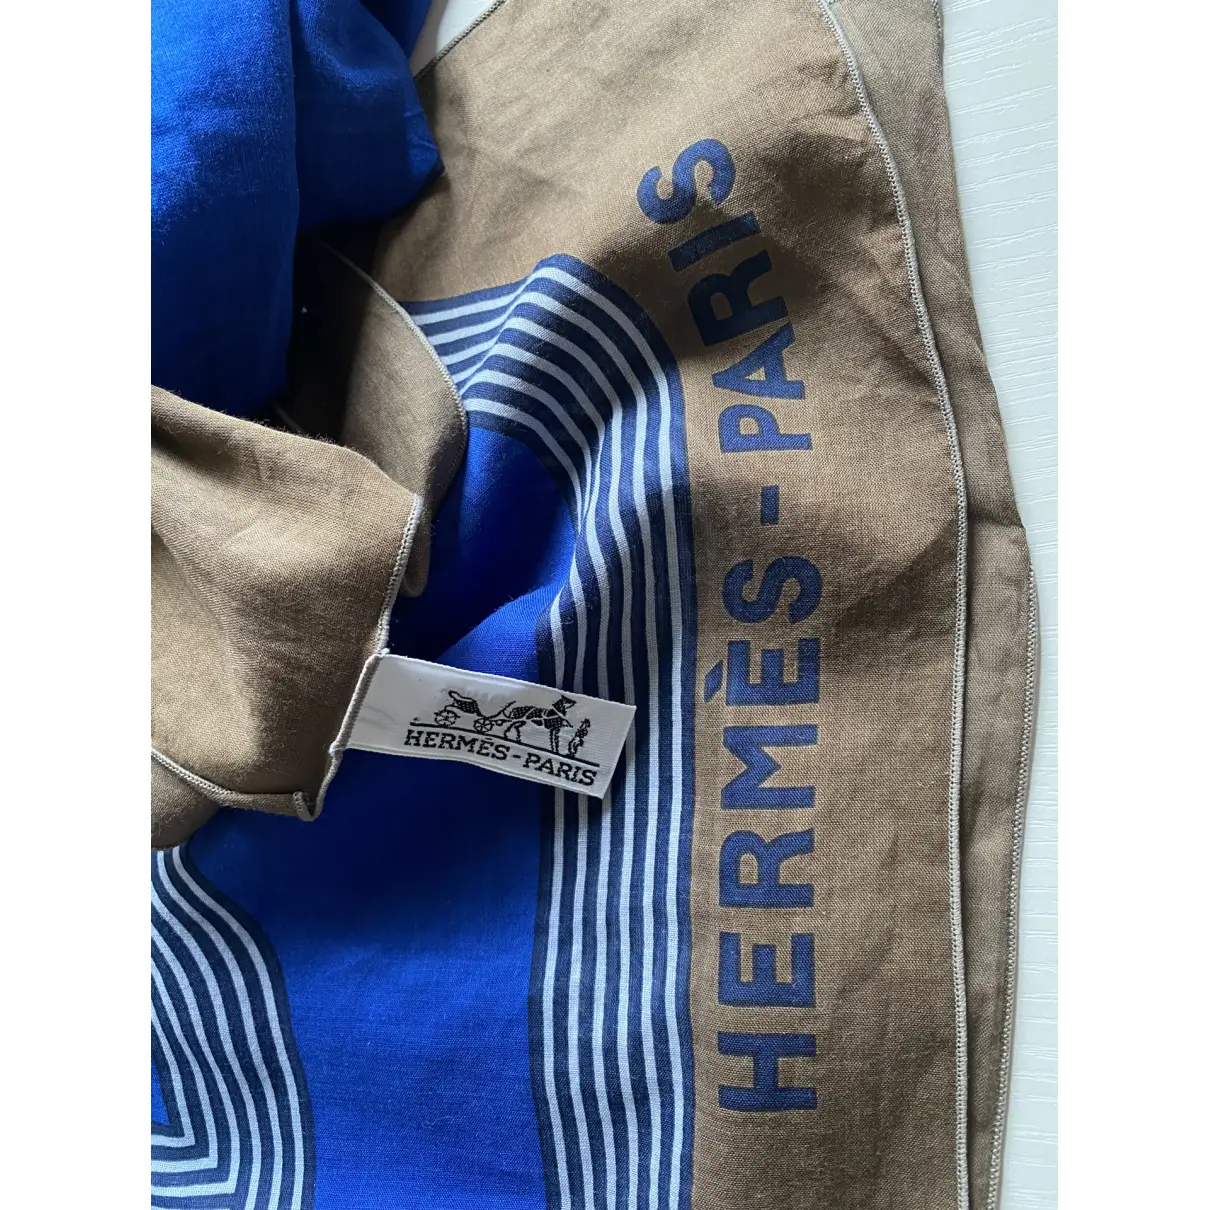 Buy Hermès Stole online